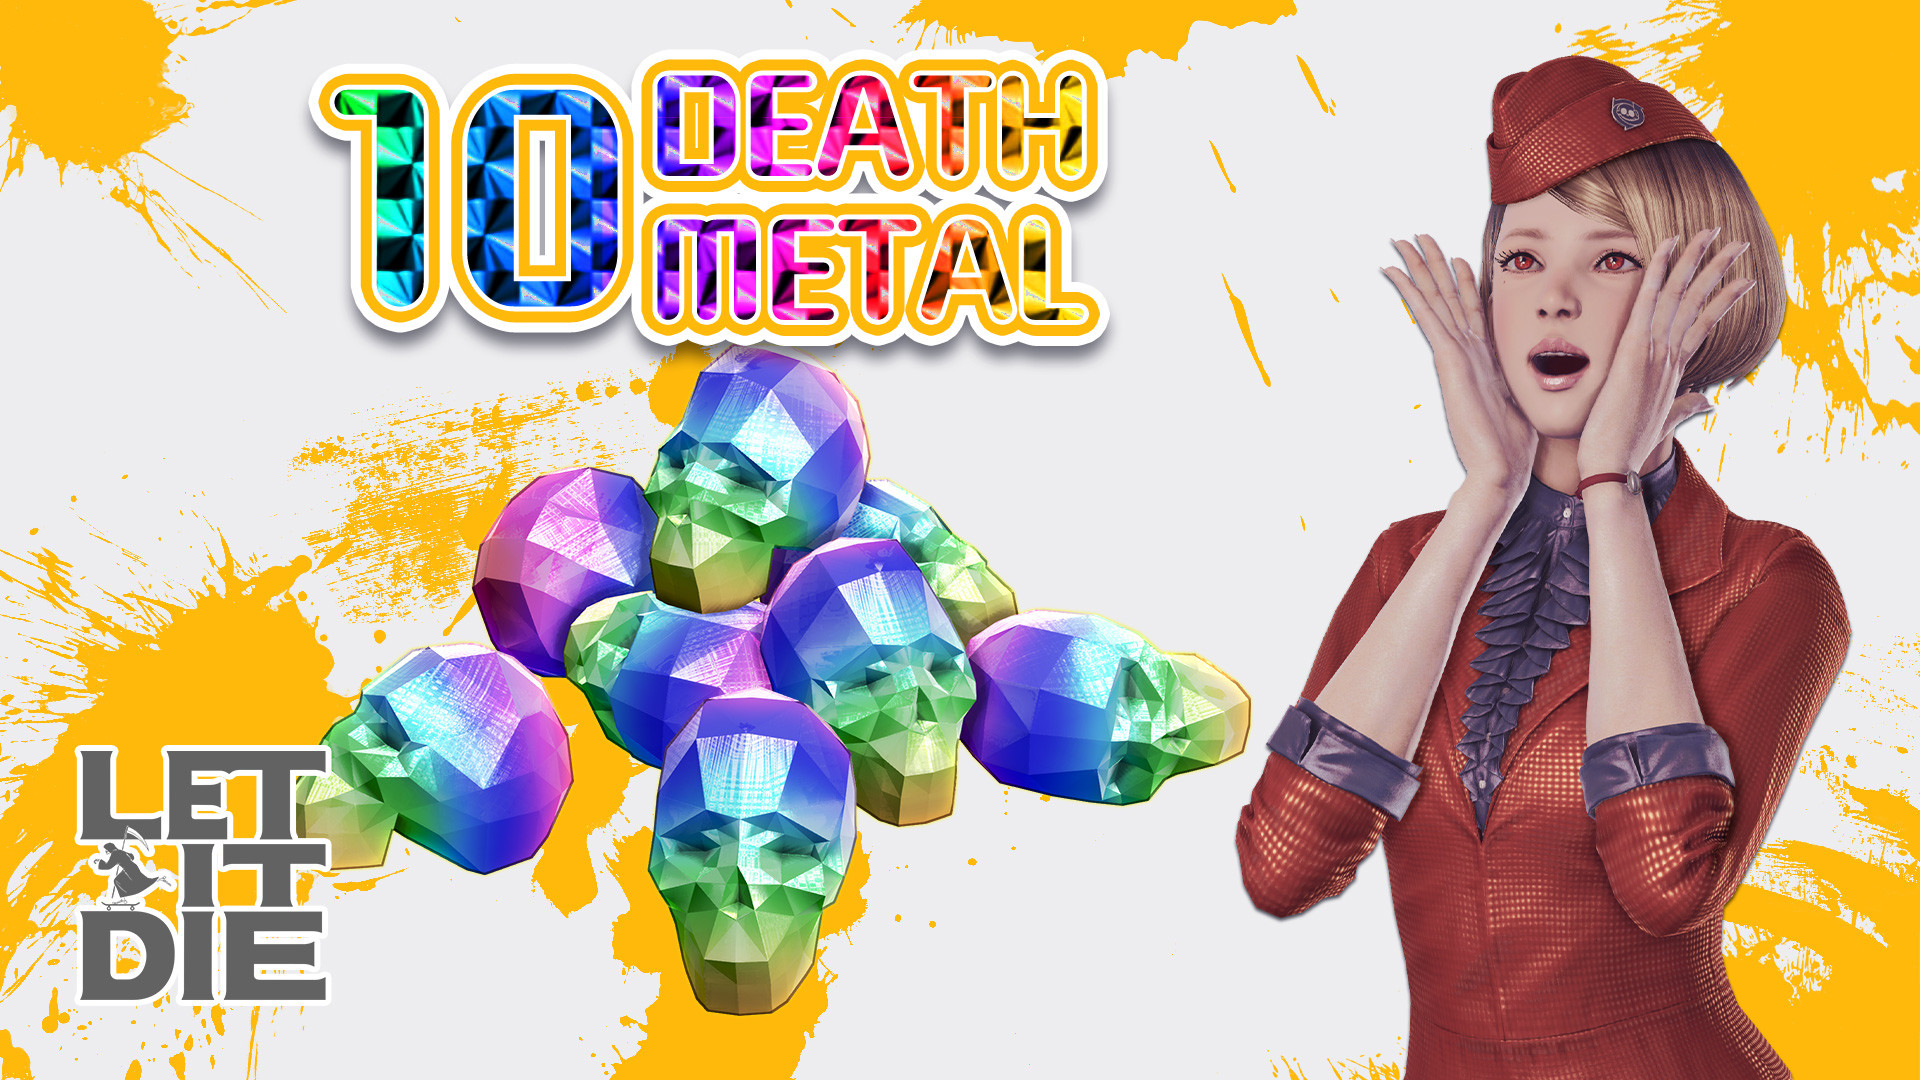 LET IT DIE -(Special)10 Death Metals- 019 Featured Screenshot #1